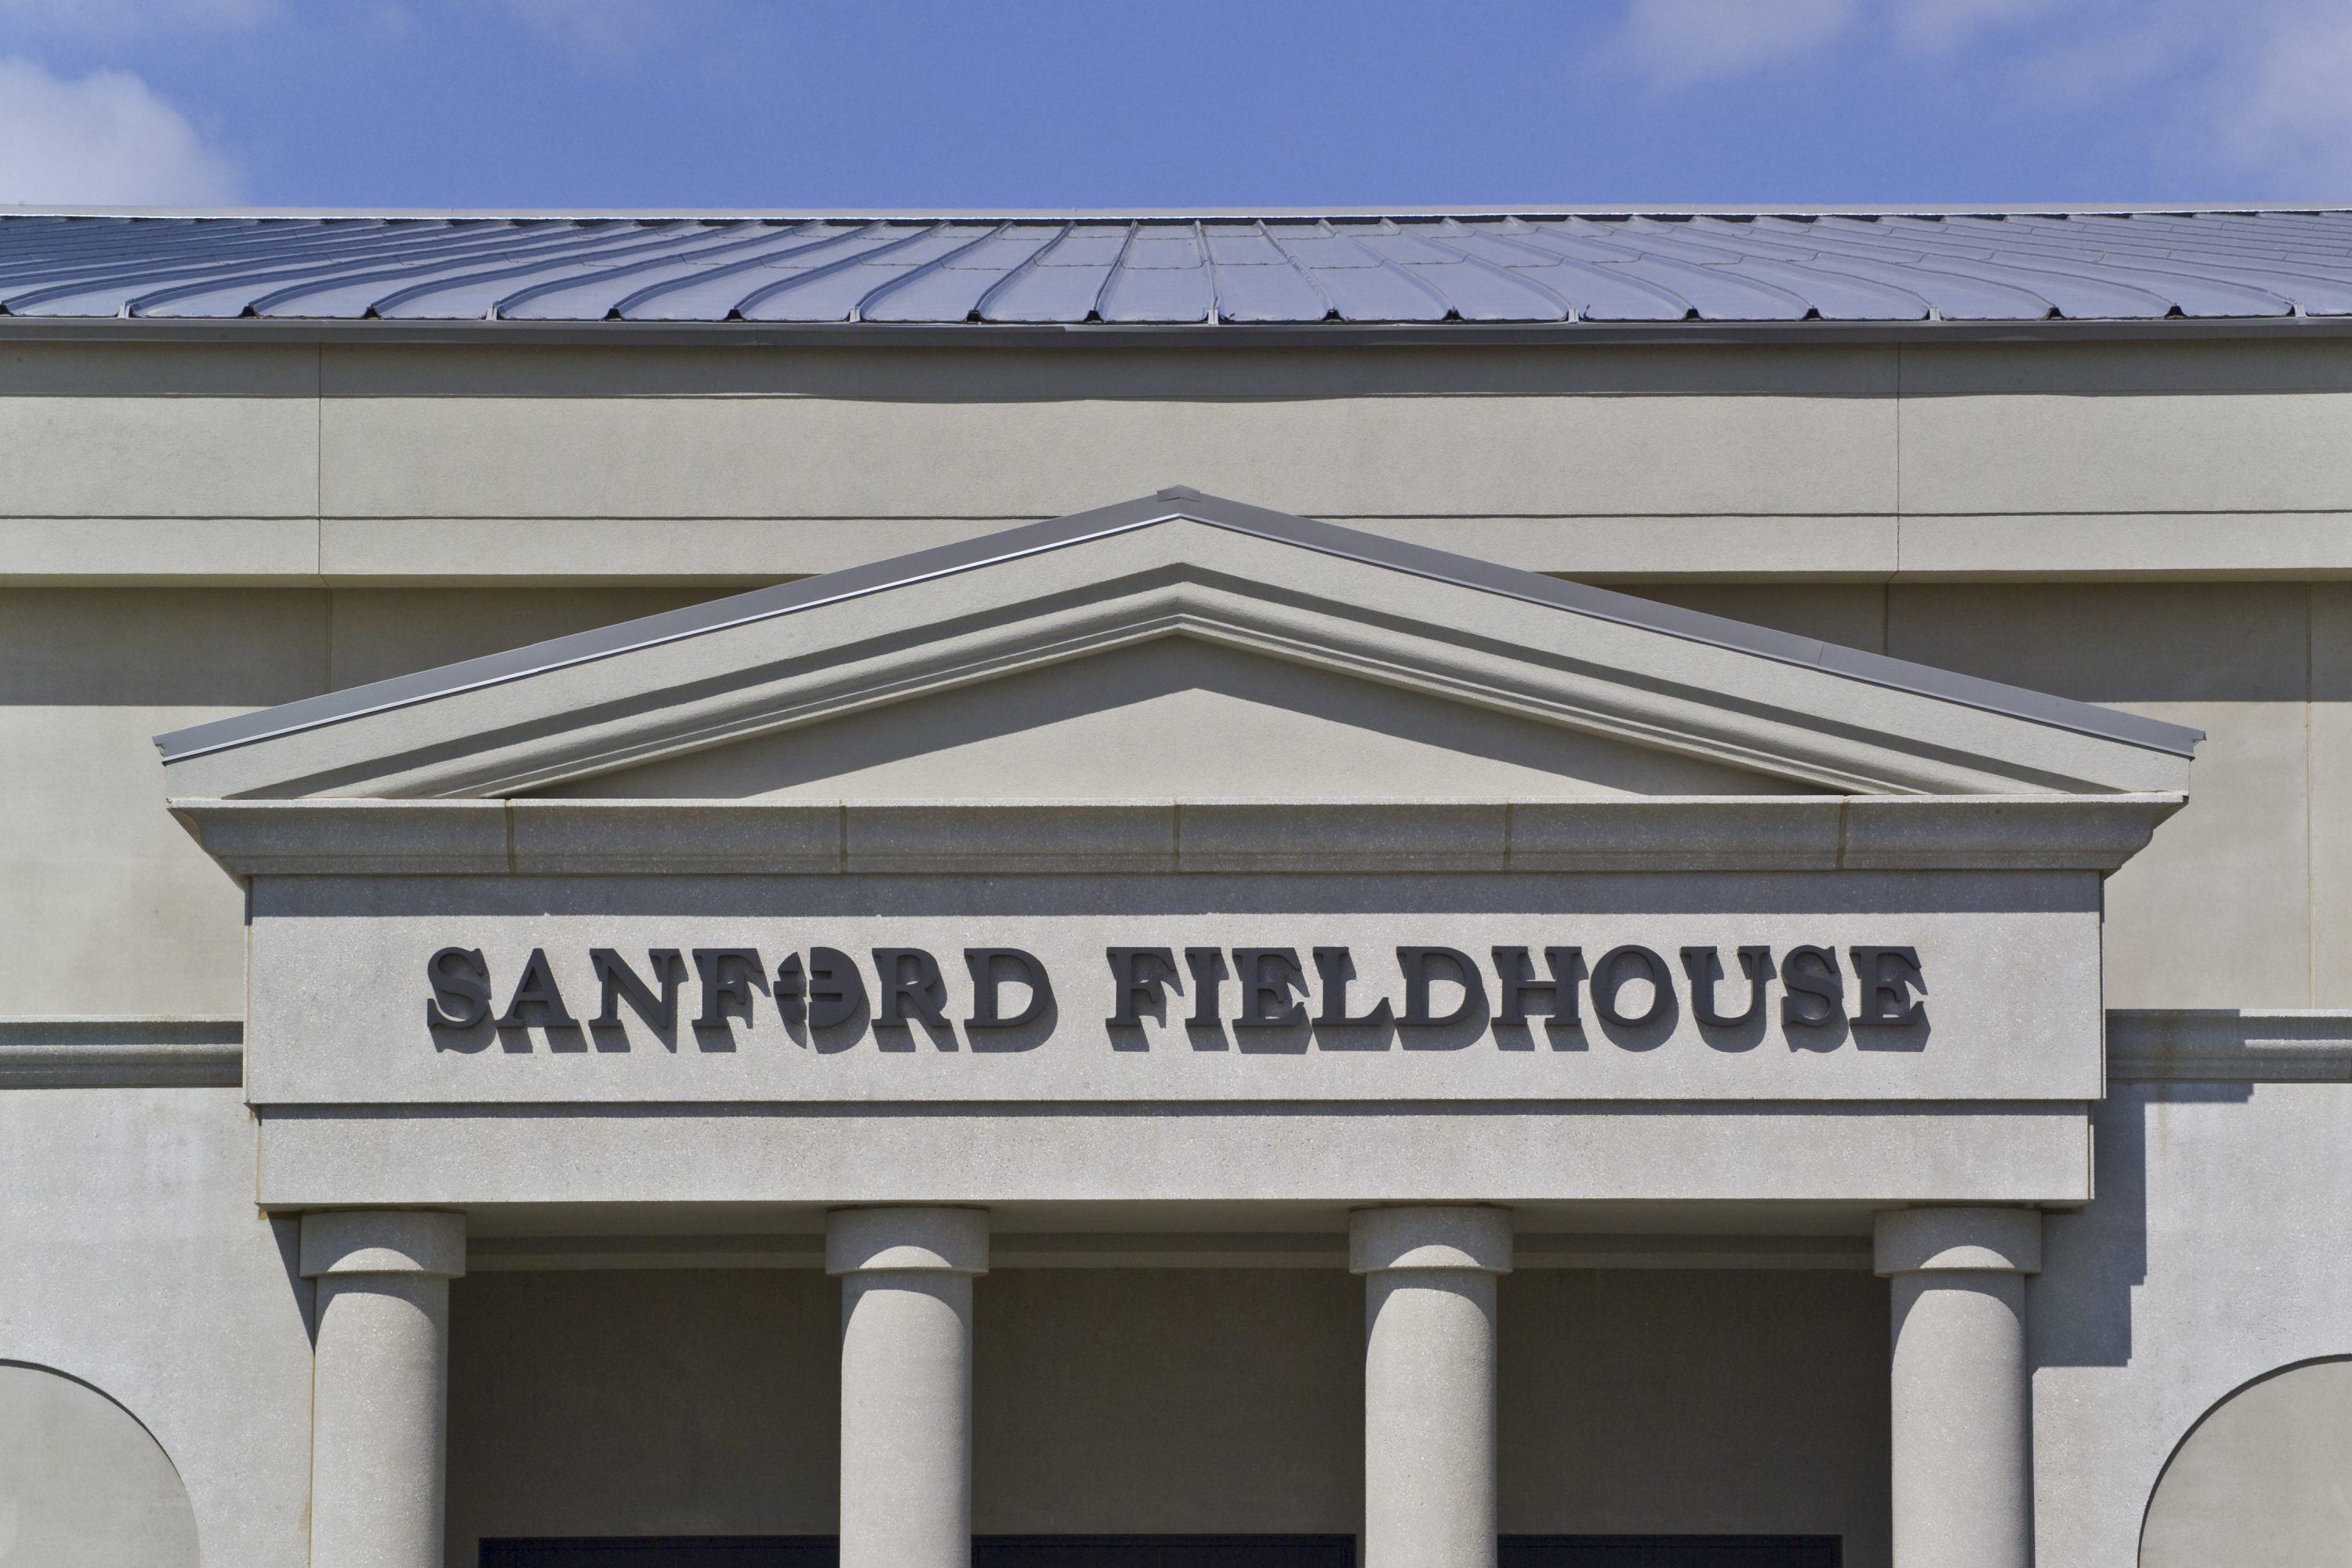 Sanford Fieldhouse